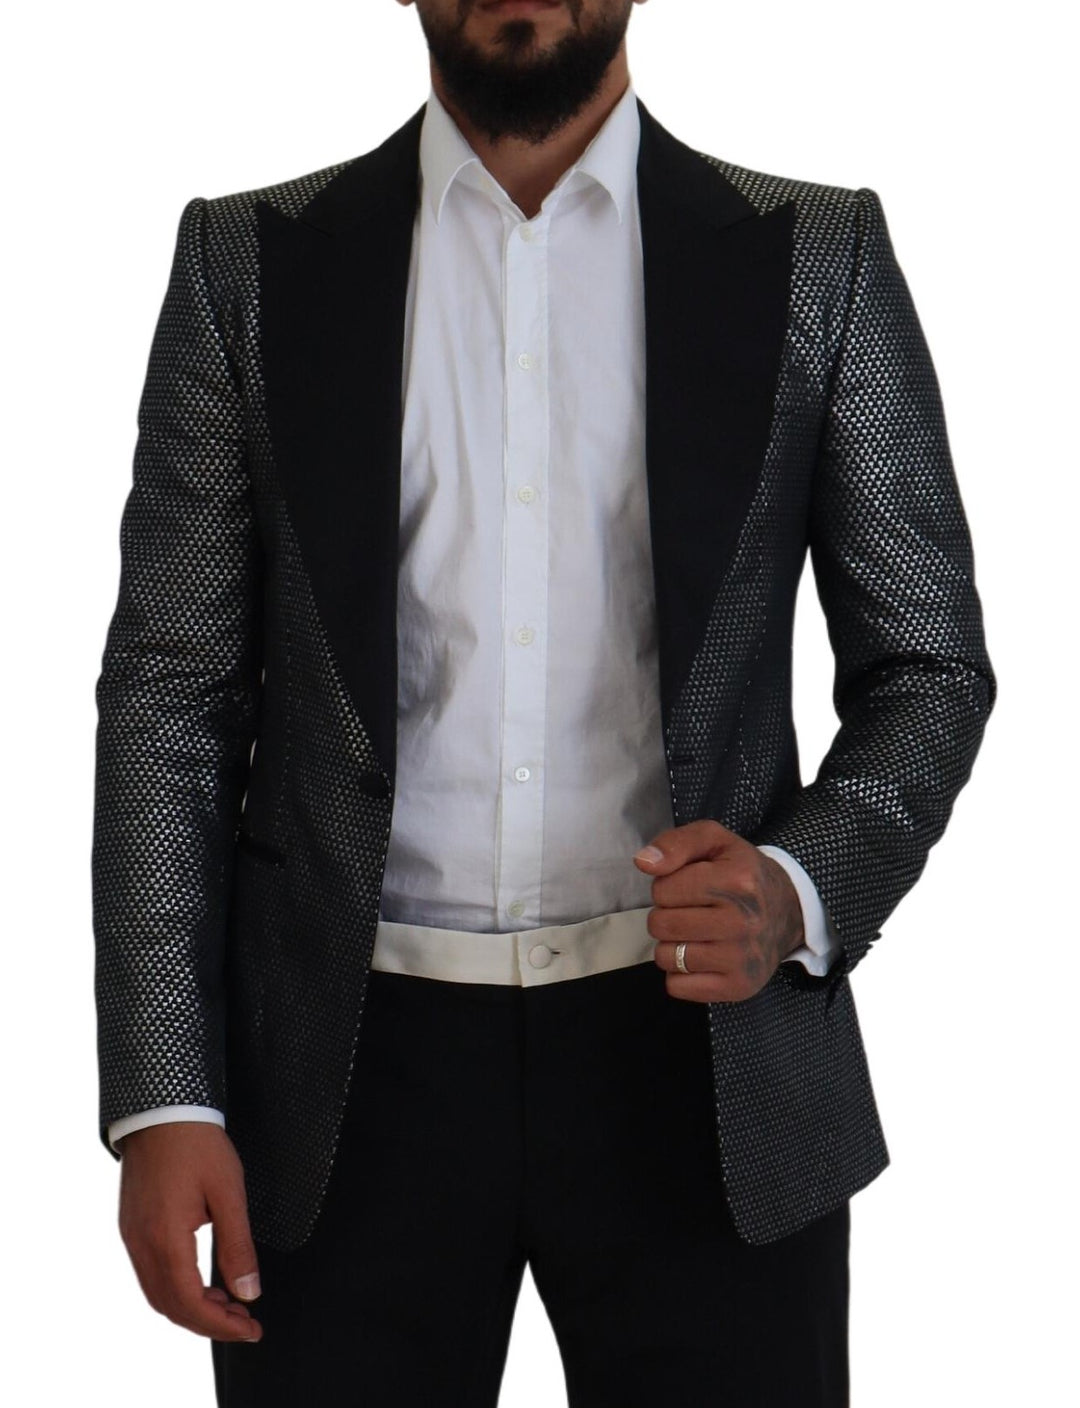 Dolce & Gabbana Black Silver Jacquard Slim Fit Jacket Blazer